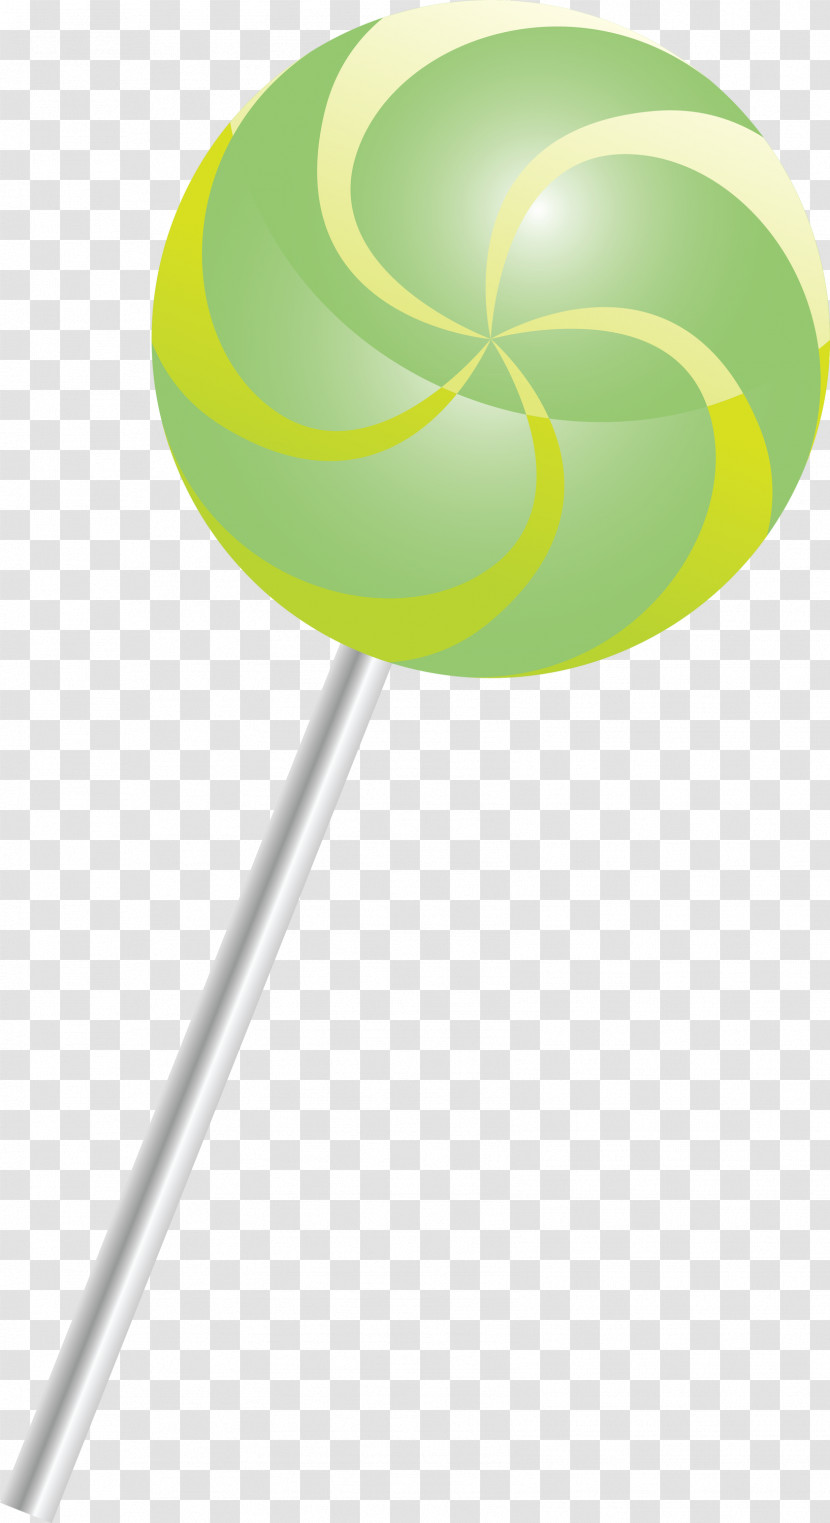 Lollipop Candy Sweet Transparent PNG